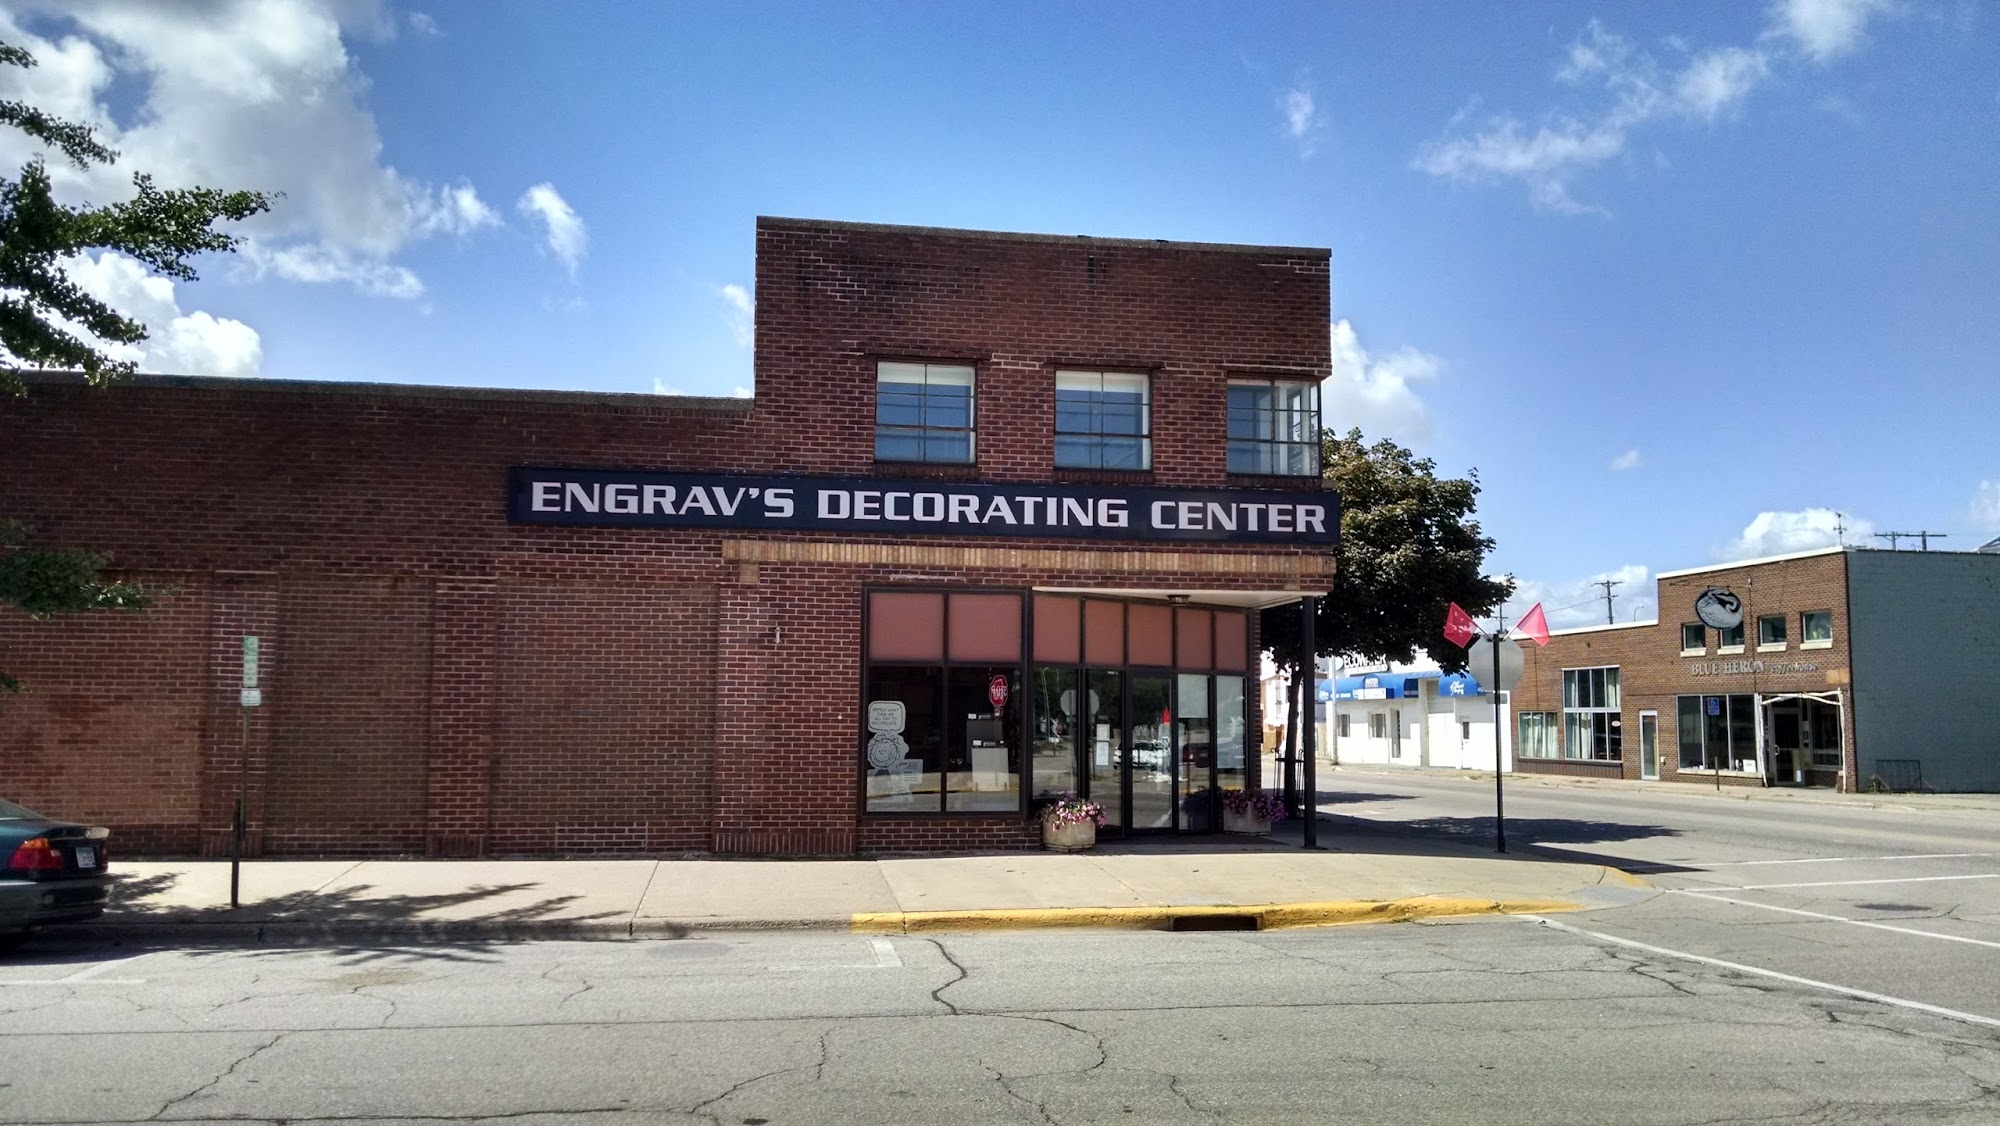 Engrav's Decorating Center